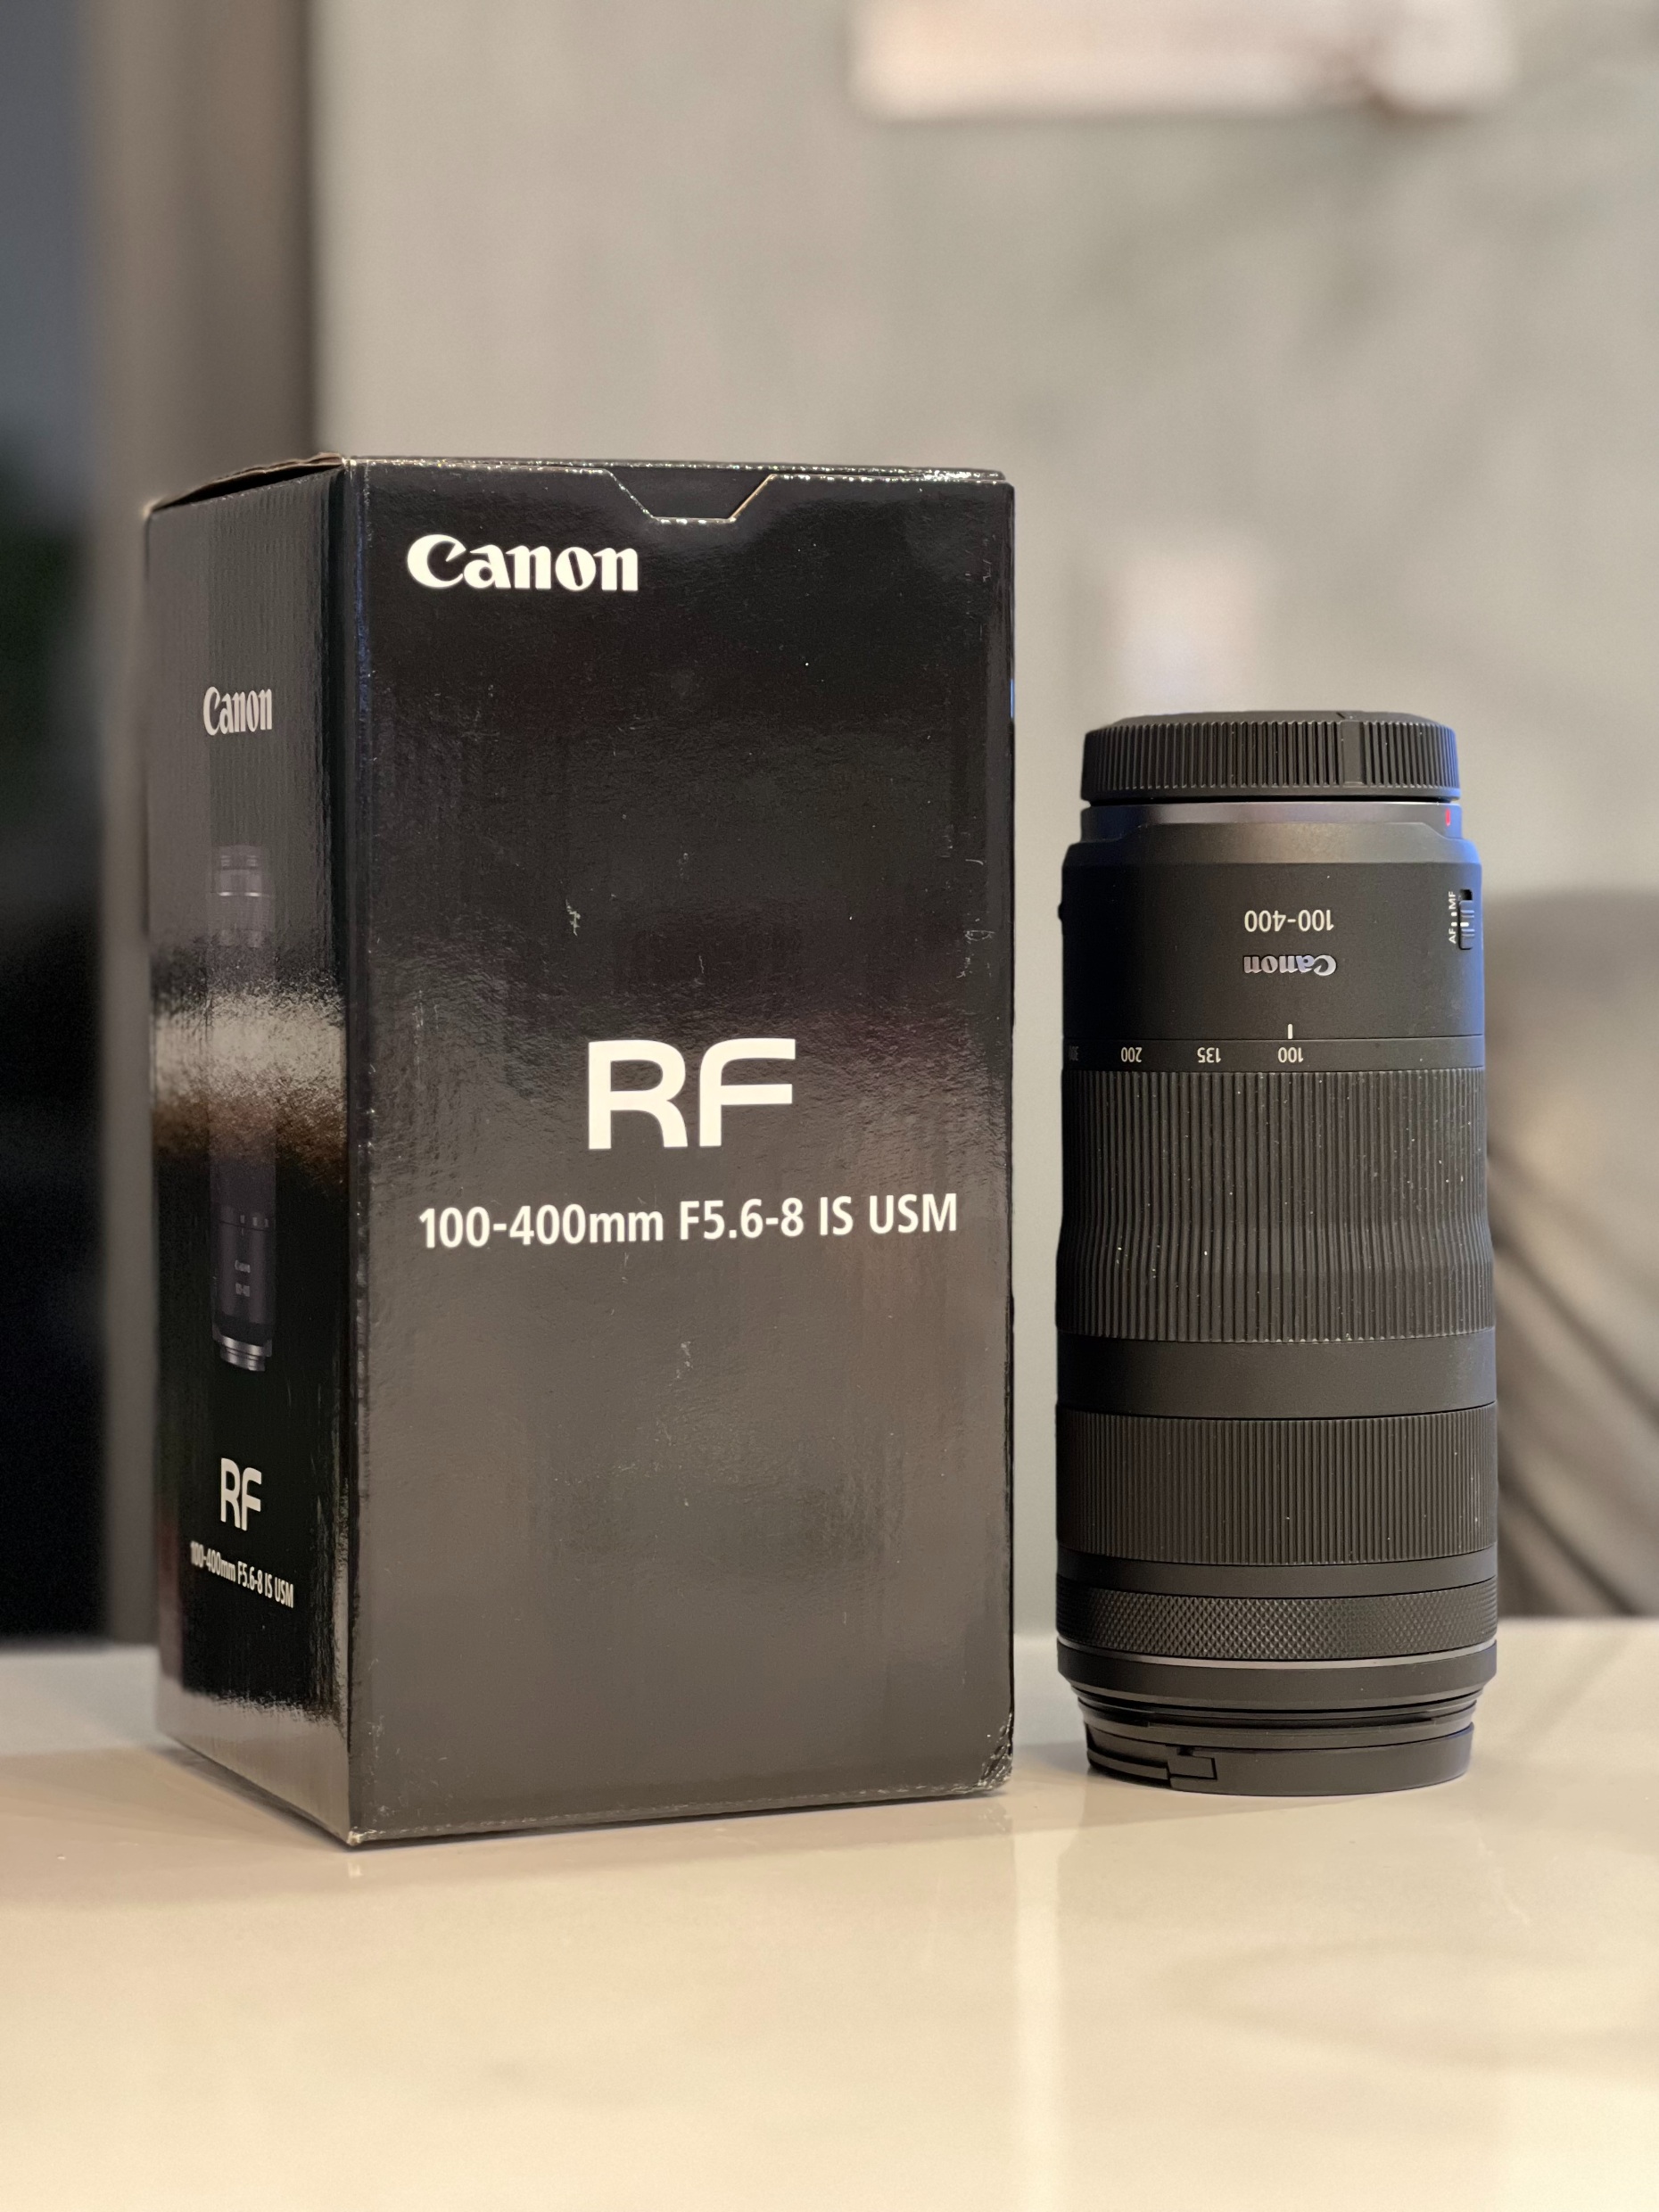 F5.6-8 R 100-400mm EOS - - IS R RF EOS Canon Gebrauchtmarkt Forum Canon Canon USM